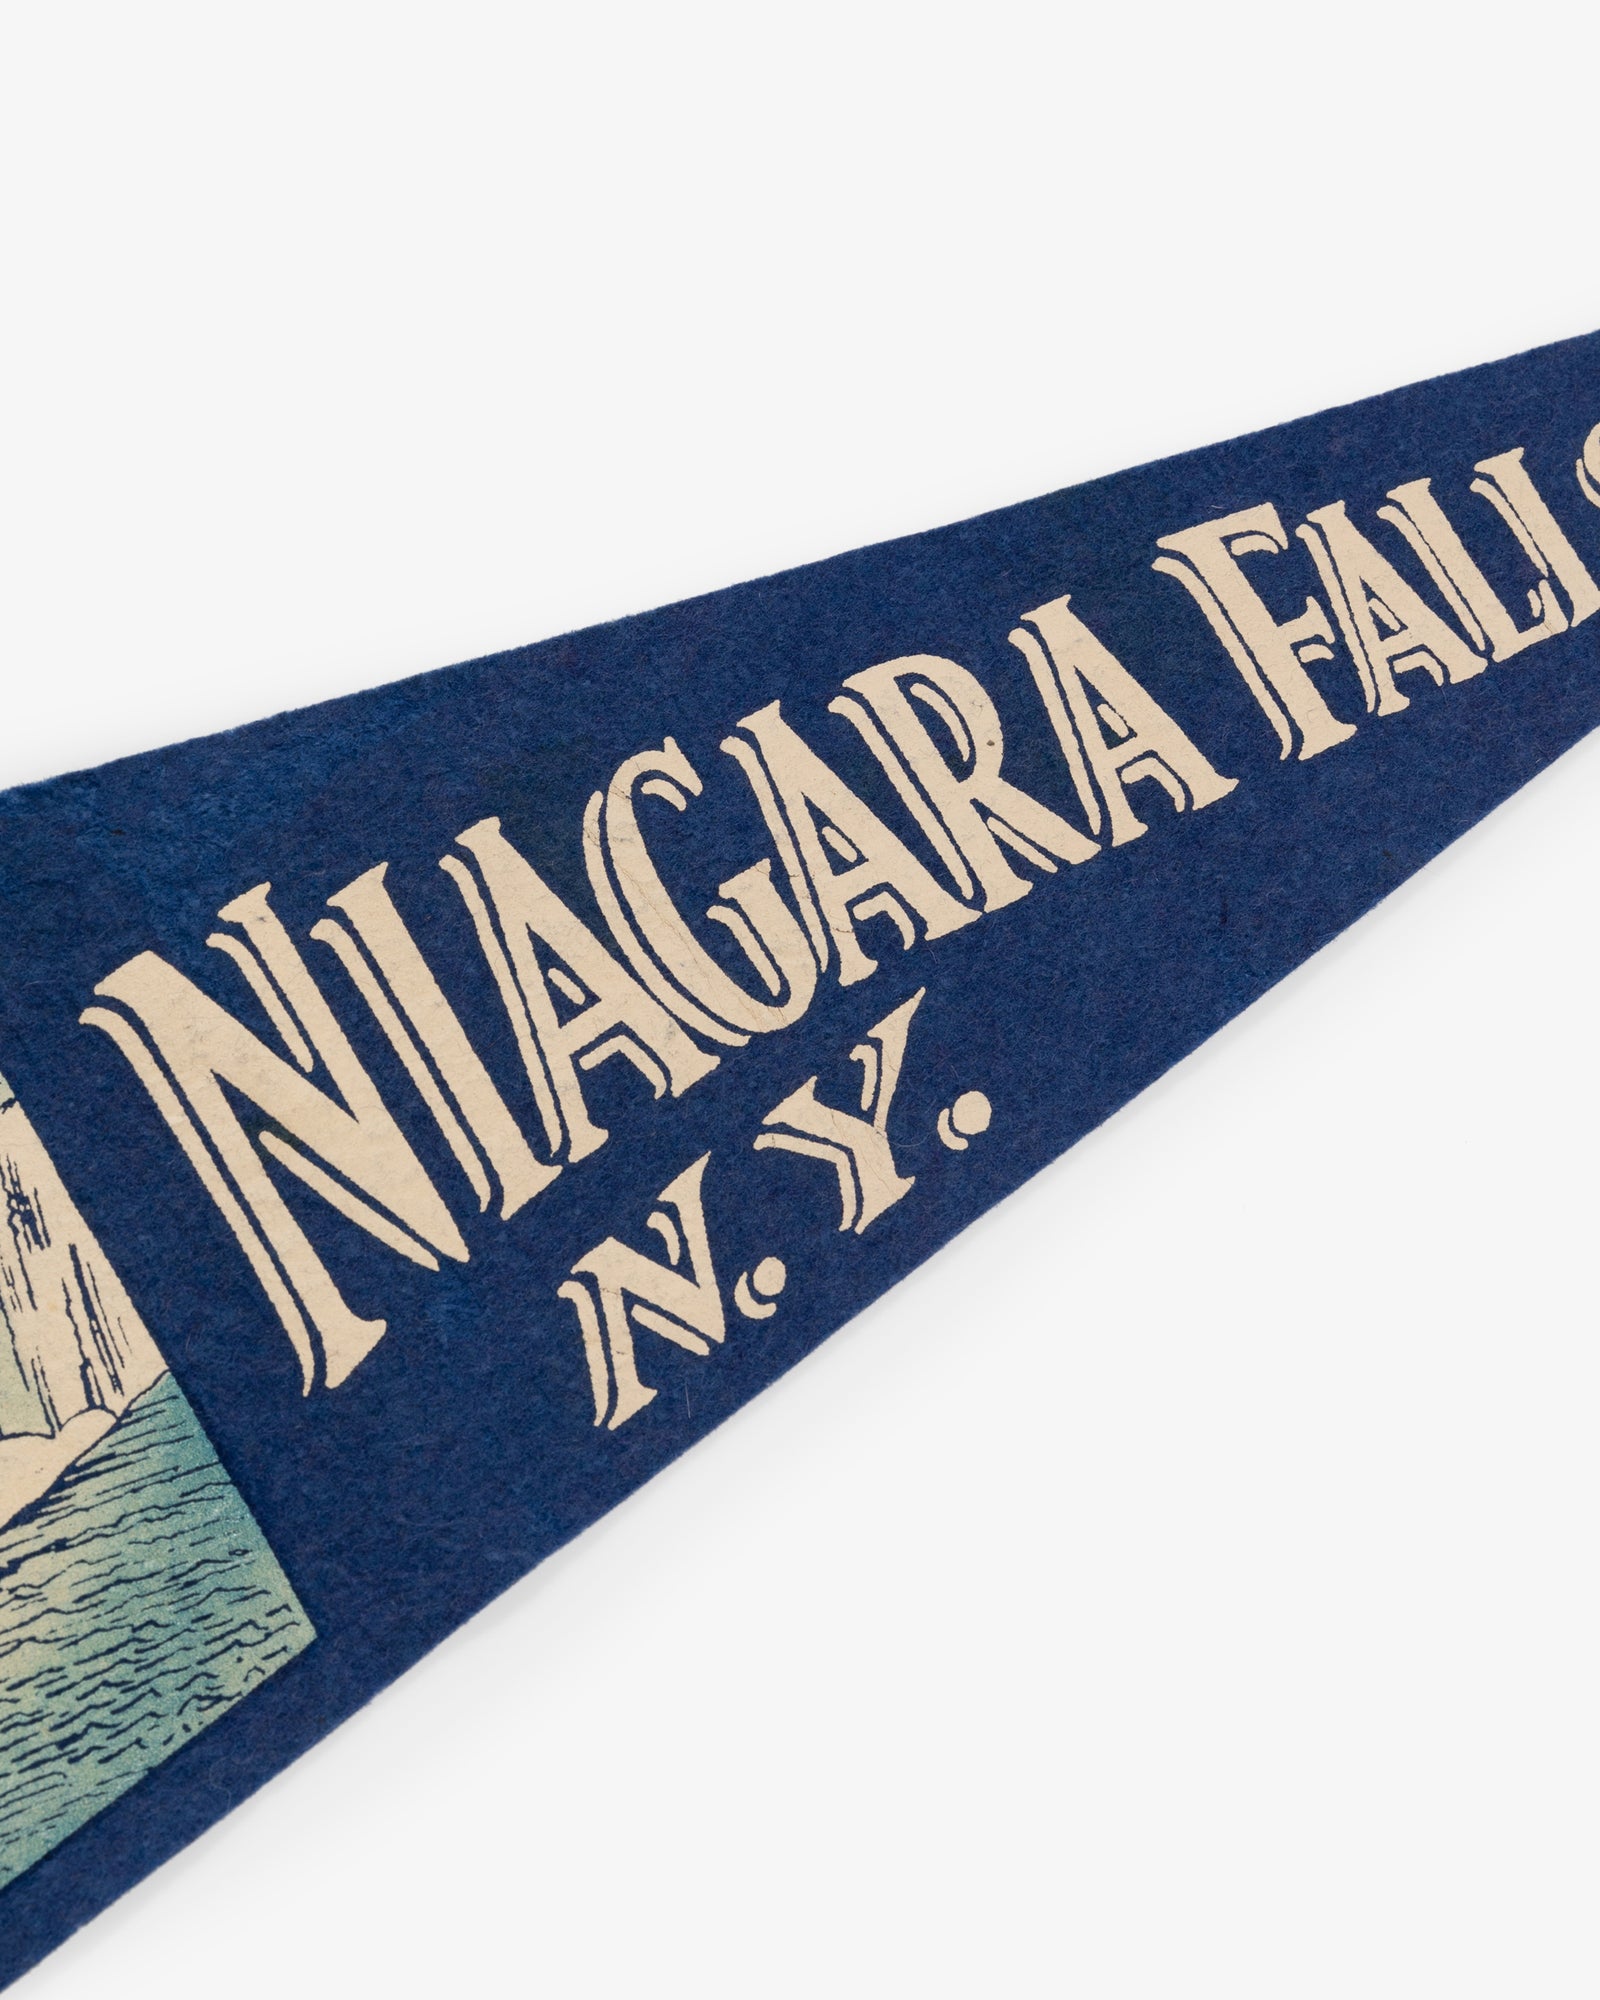 Vintage Niagara Falls Pennant